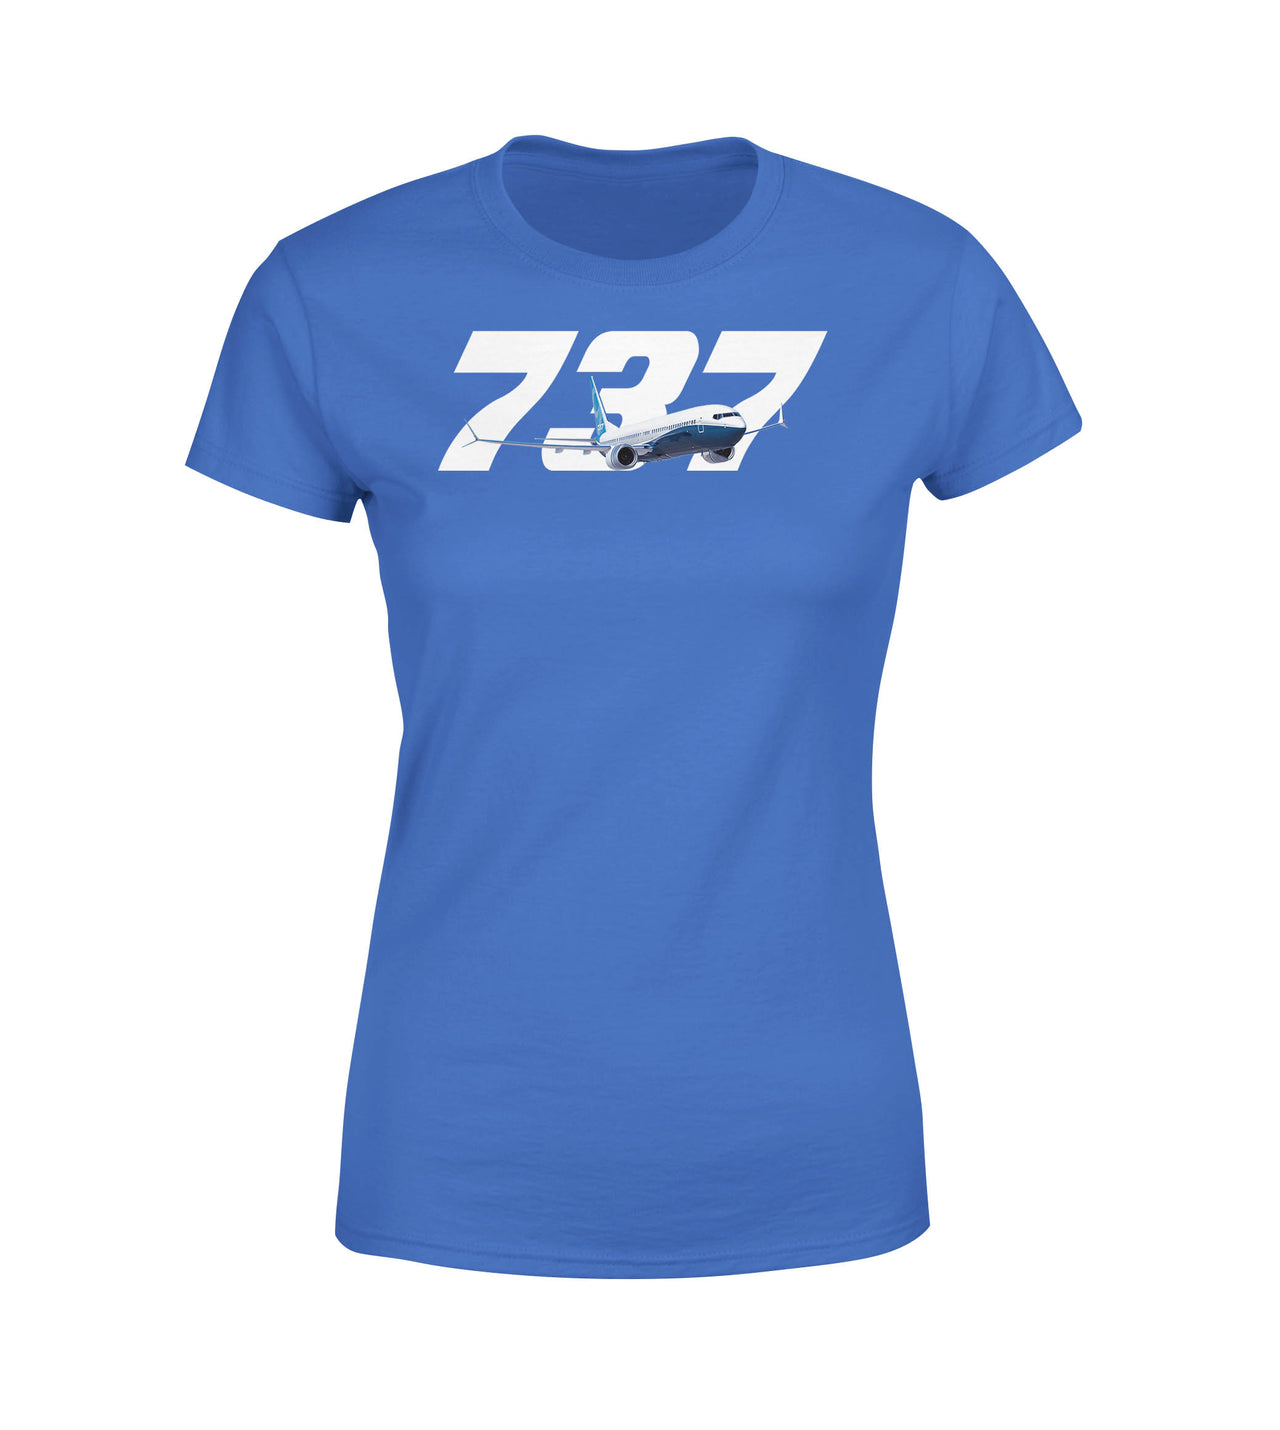 Super Boeing 737 Designed Women T-Shirts